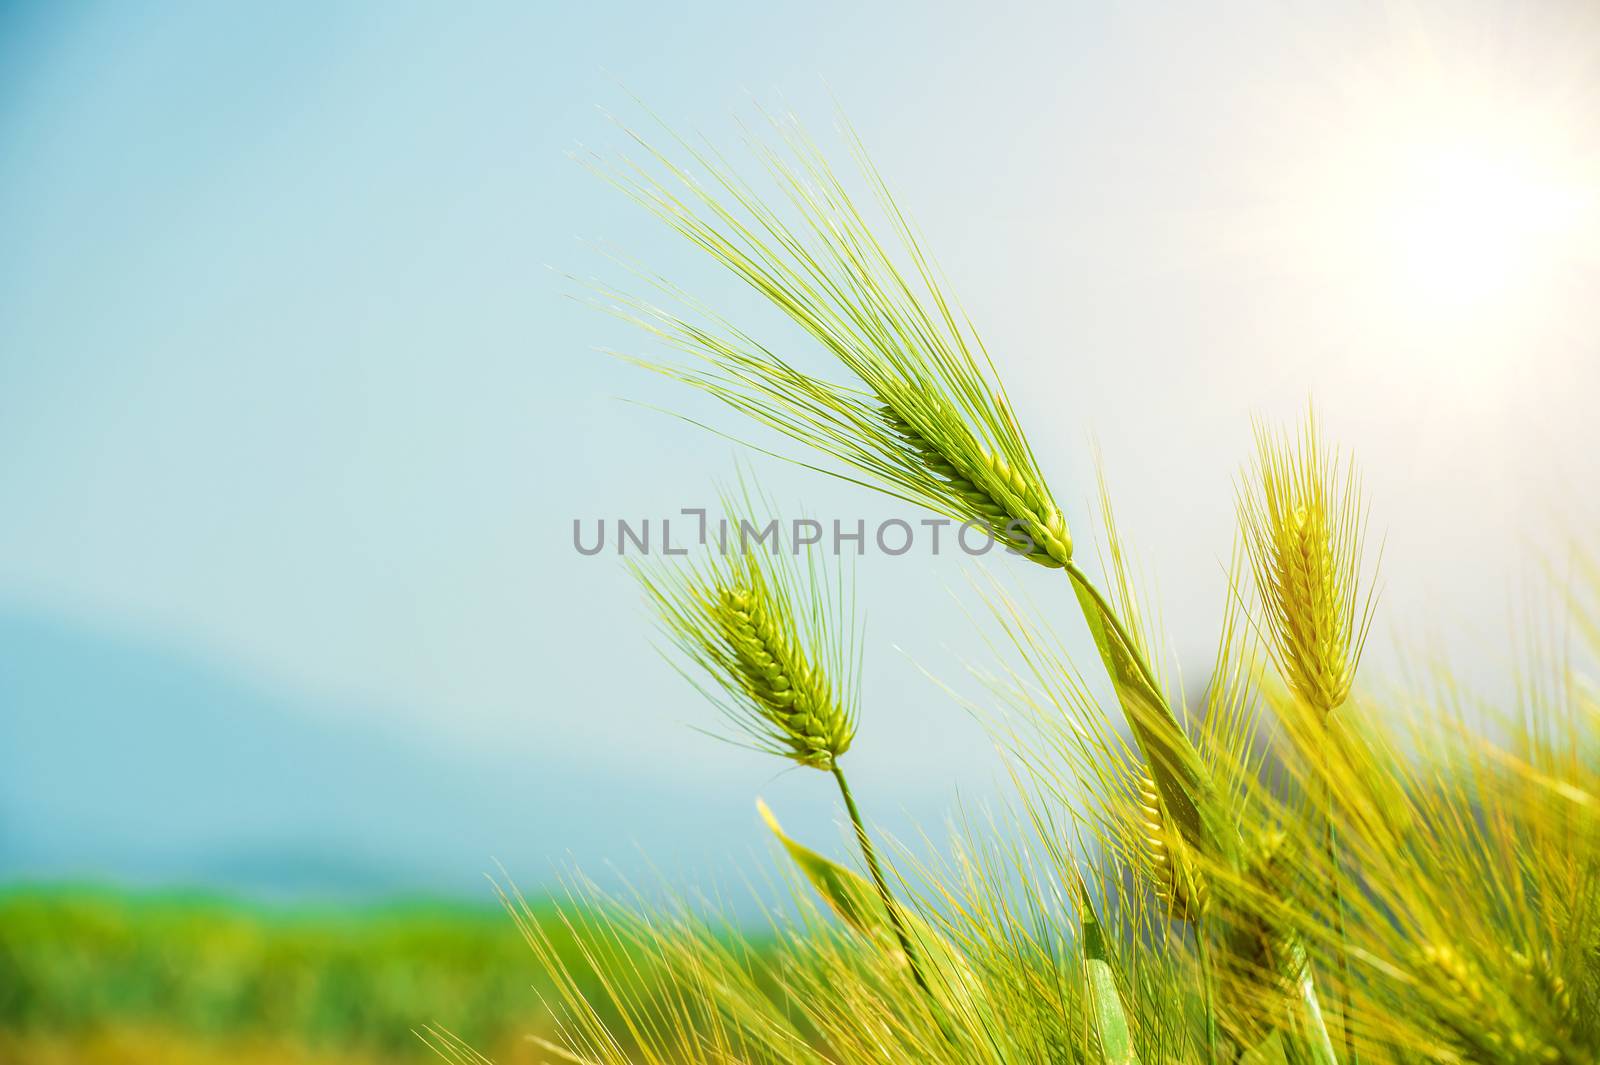 Barley Field by gutarphotoghaphy